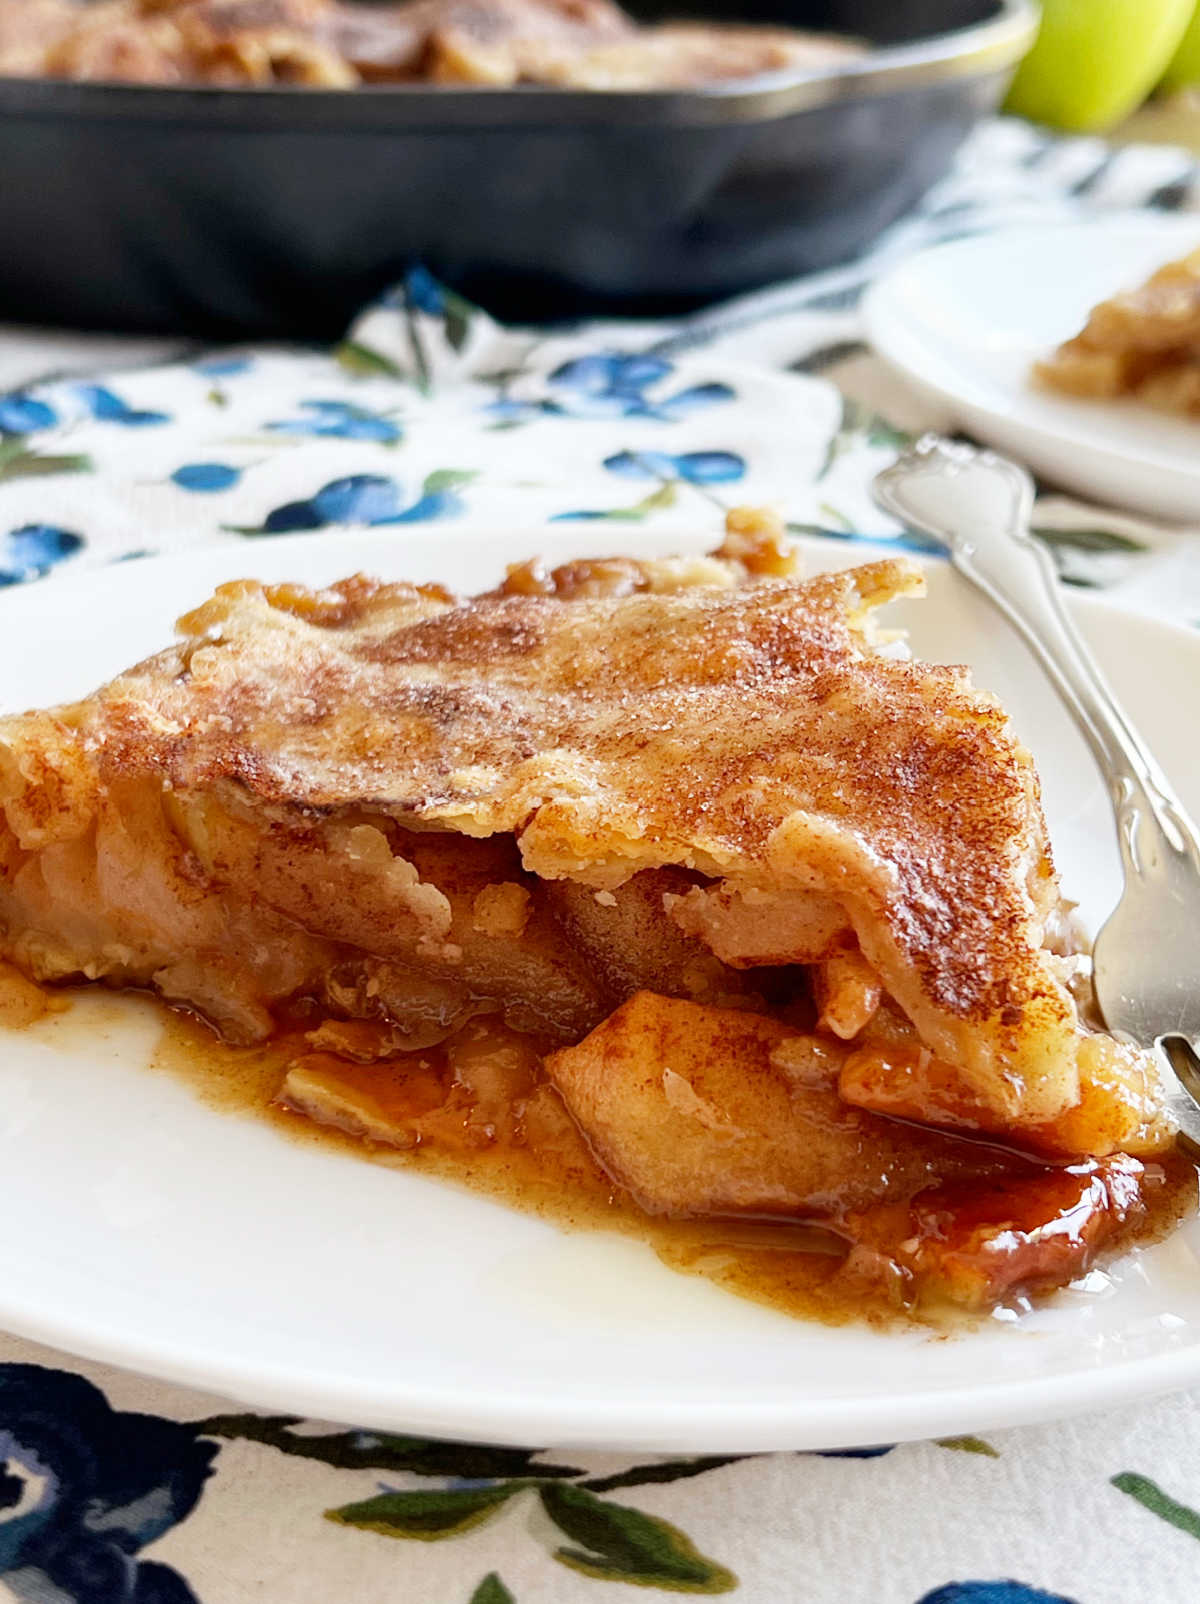 slice of apple pie in caramel sauce on plate.